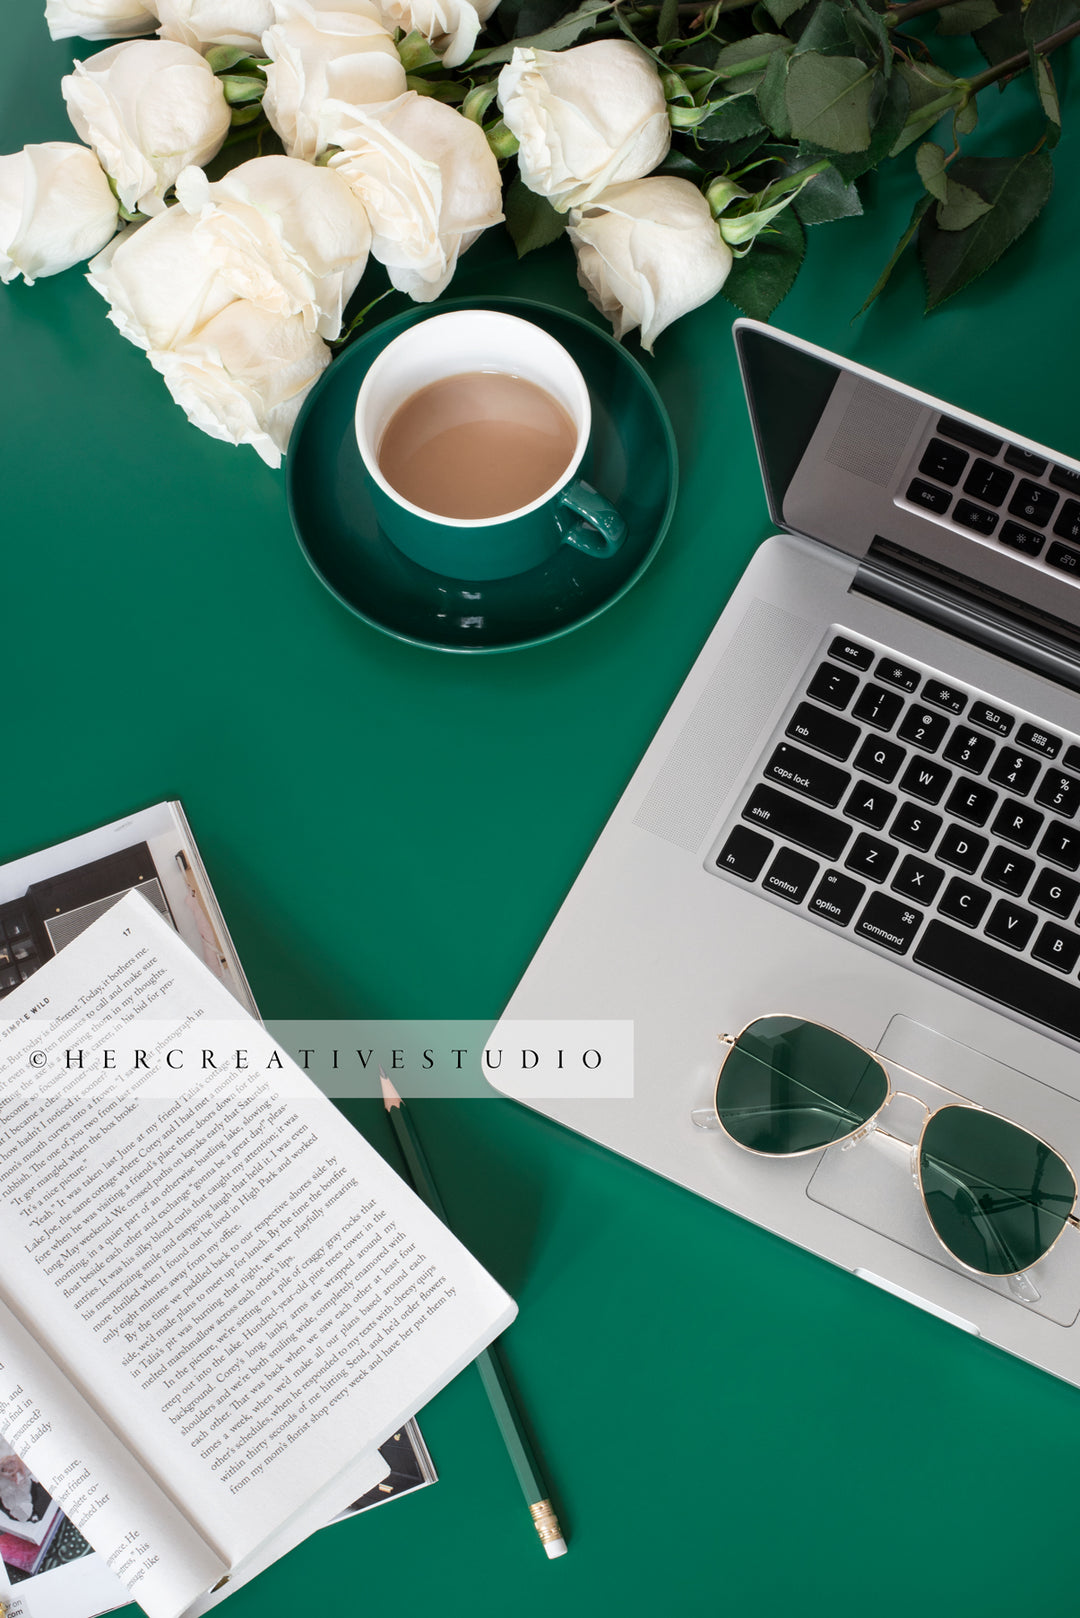 Laptop, Sunglasses & Coffee on Green Background. Digital Stock Image